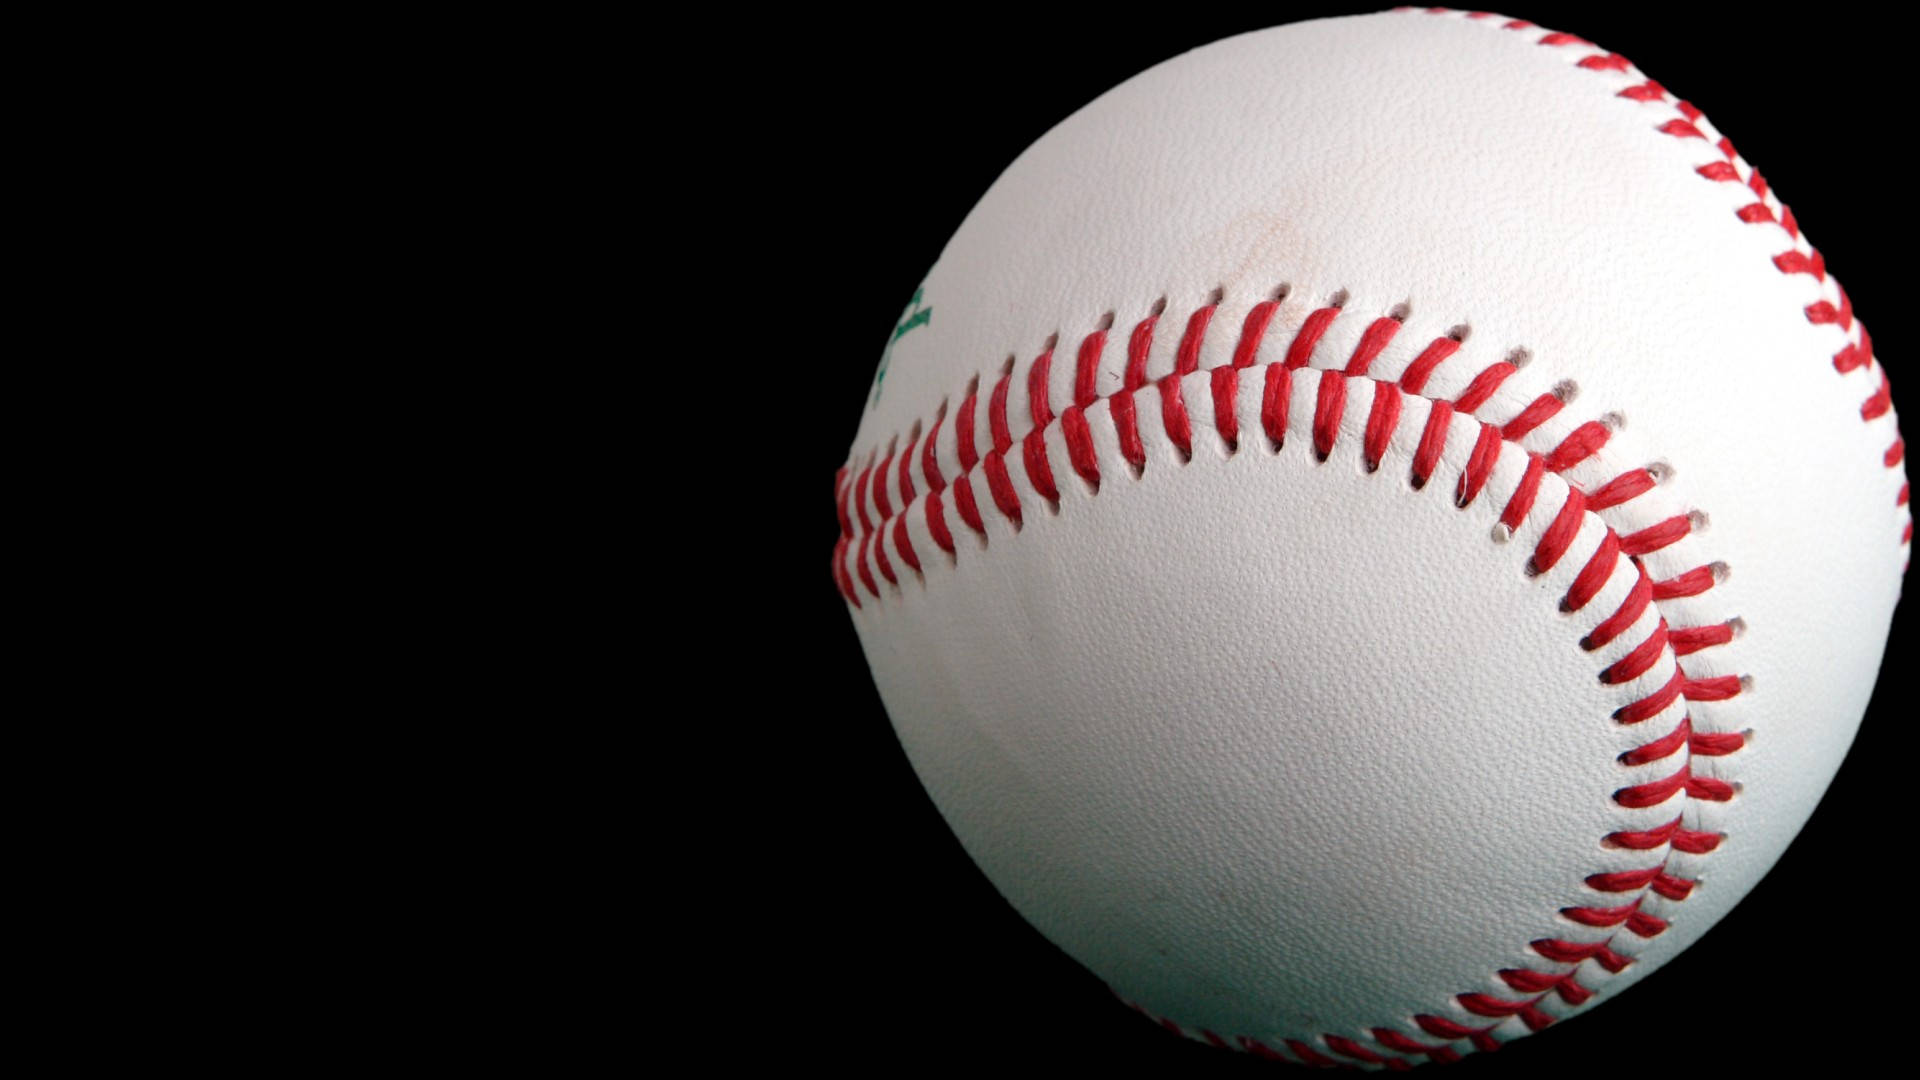 Cool Baseball Ball Close-up Wallpaper